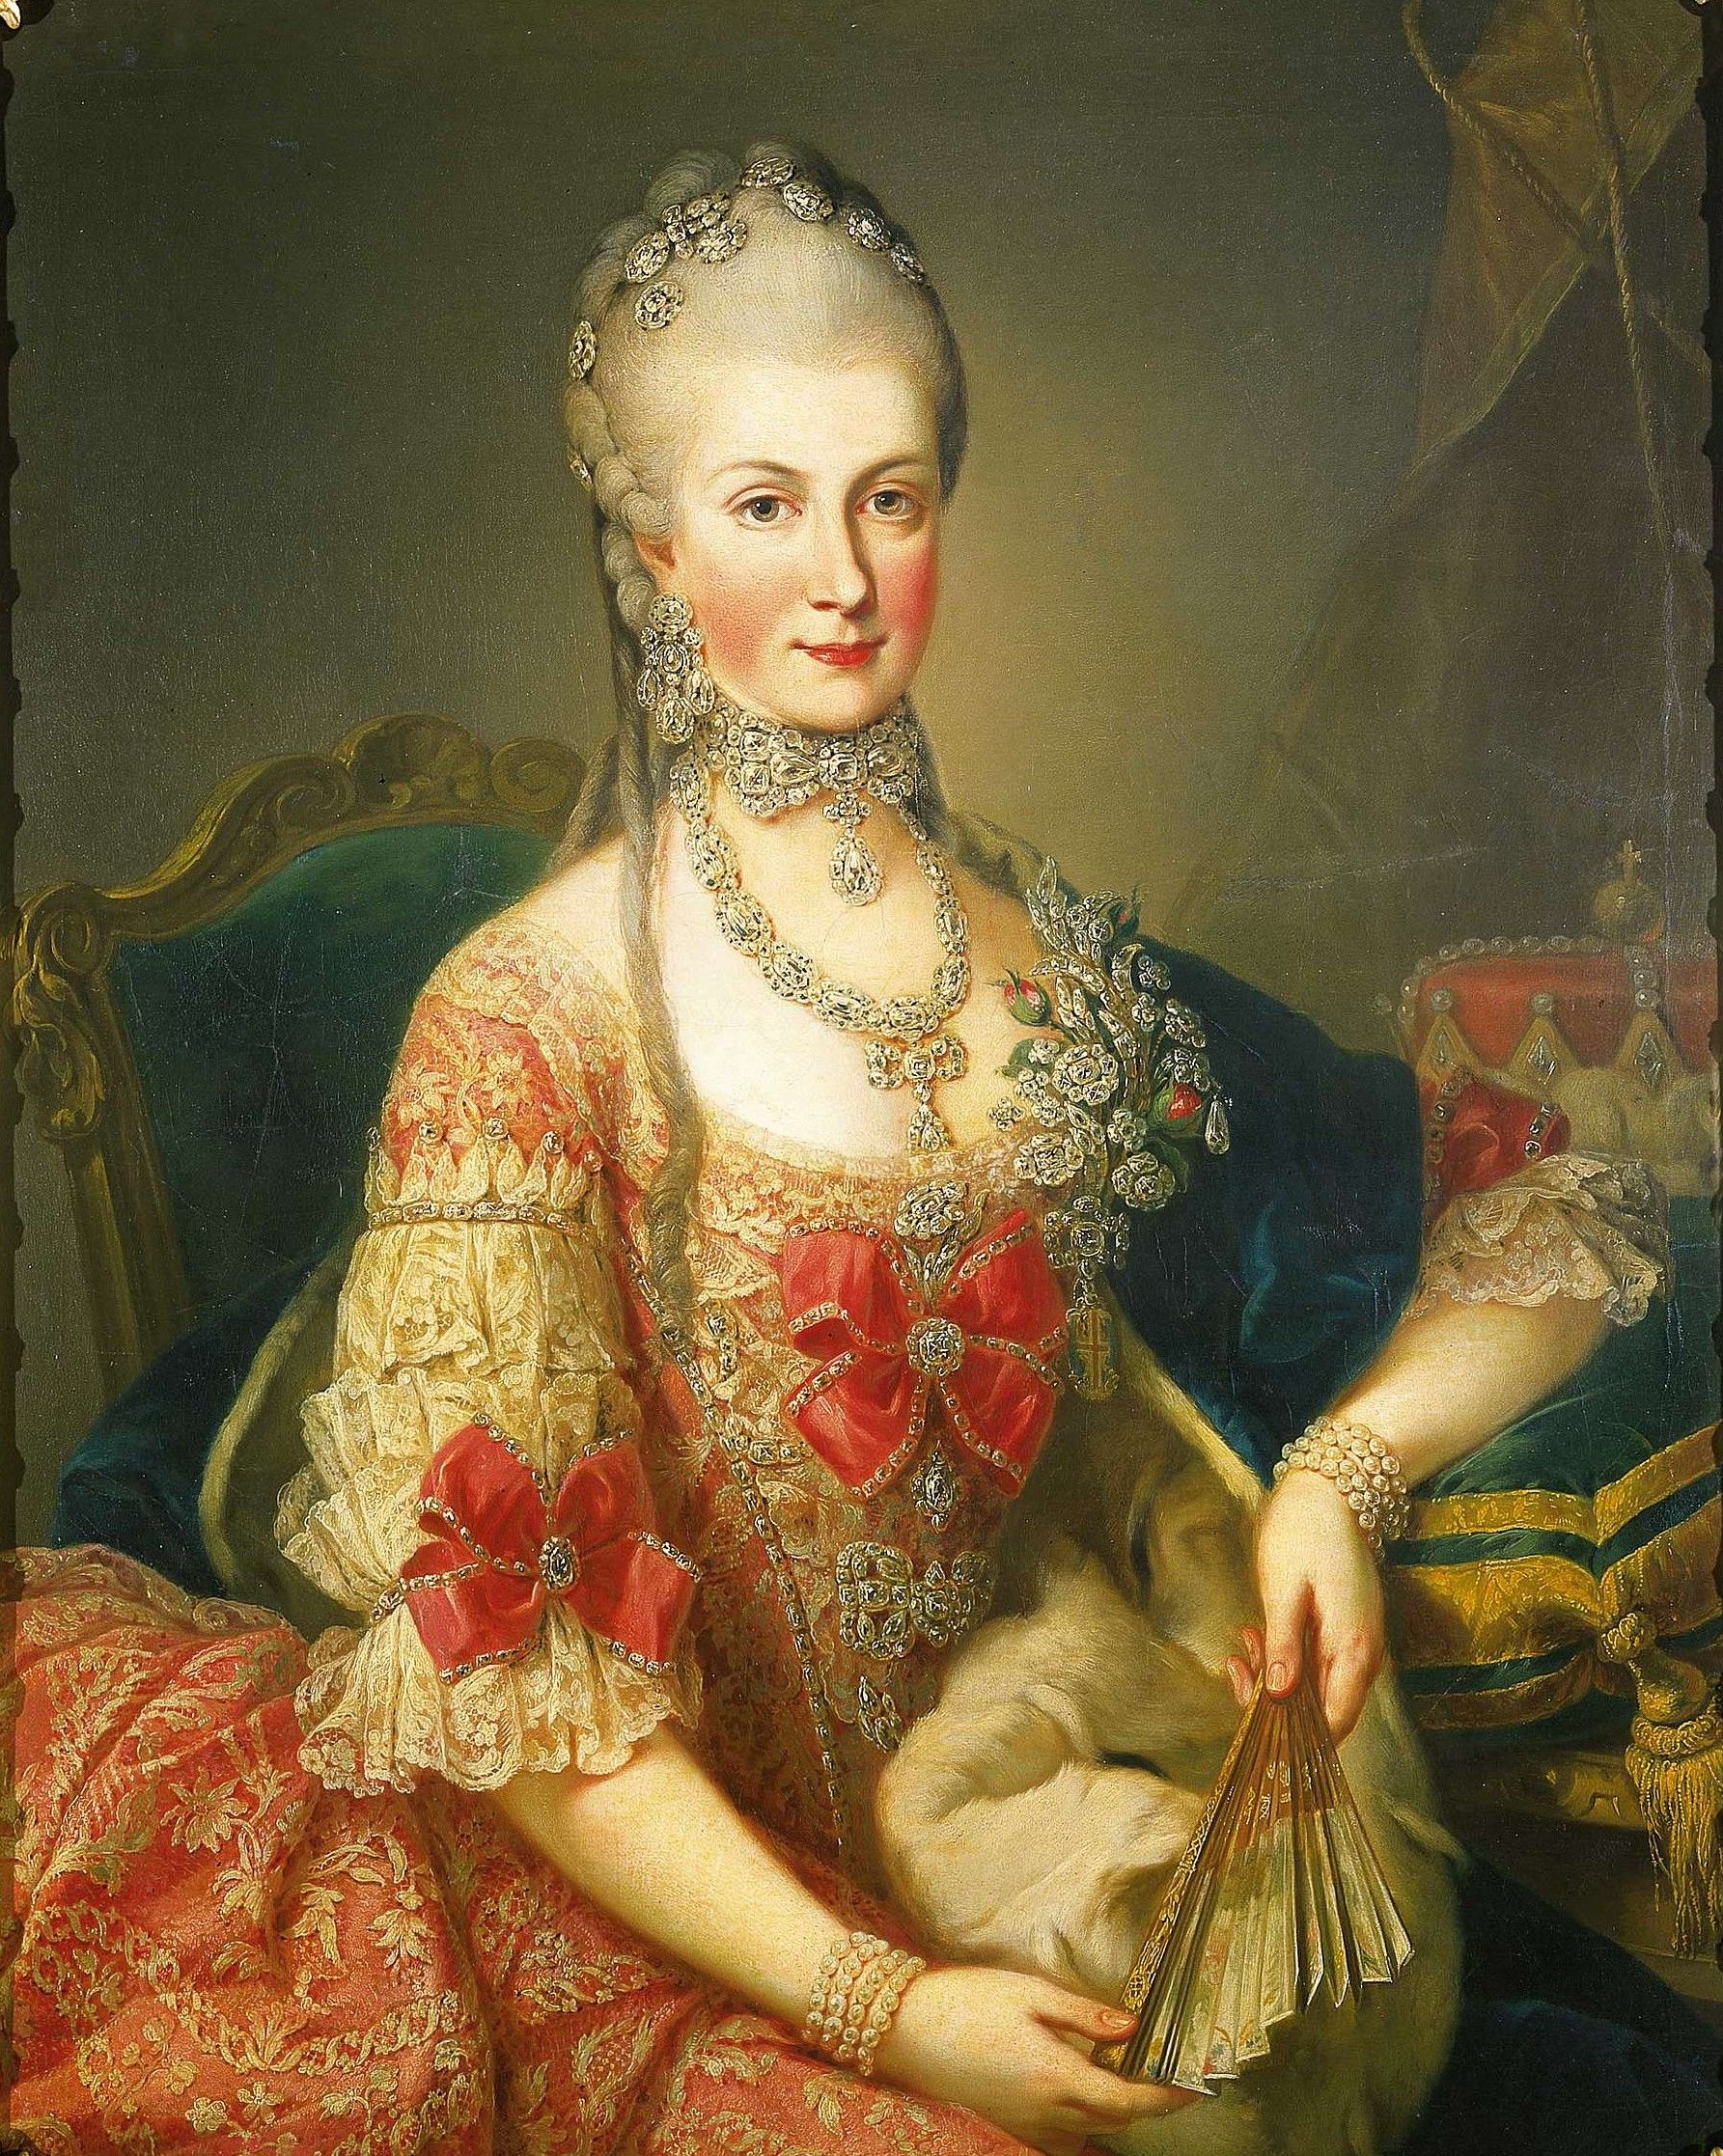 The Archduchess Christina of Austria by Martin van Meytens, 1765. Schönbrunn Palace.